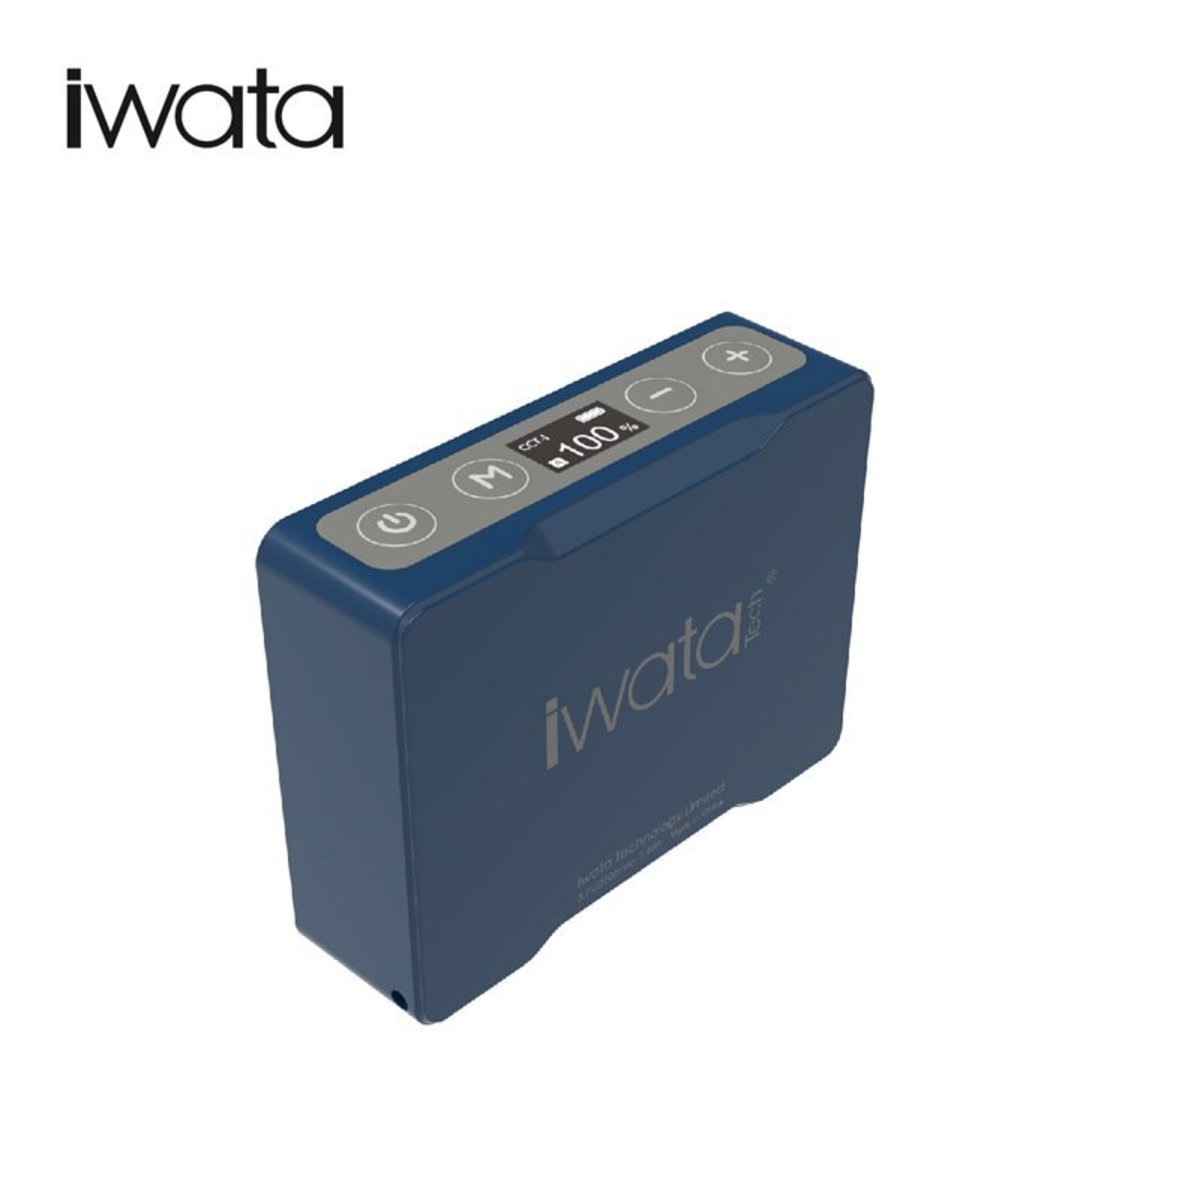 Iwata GM1 Pro 輕巧12色彩LED補光燈